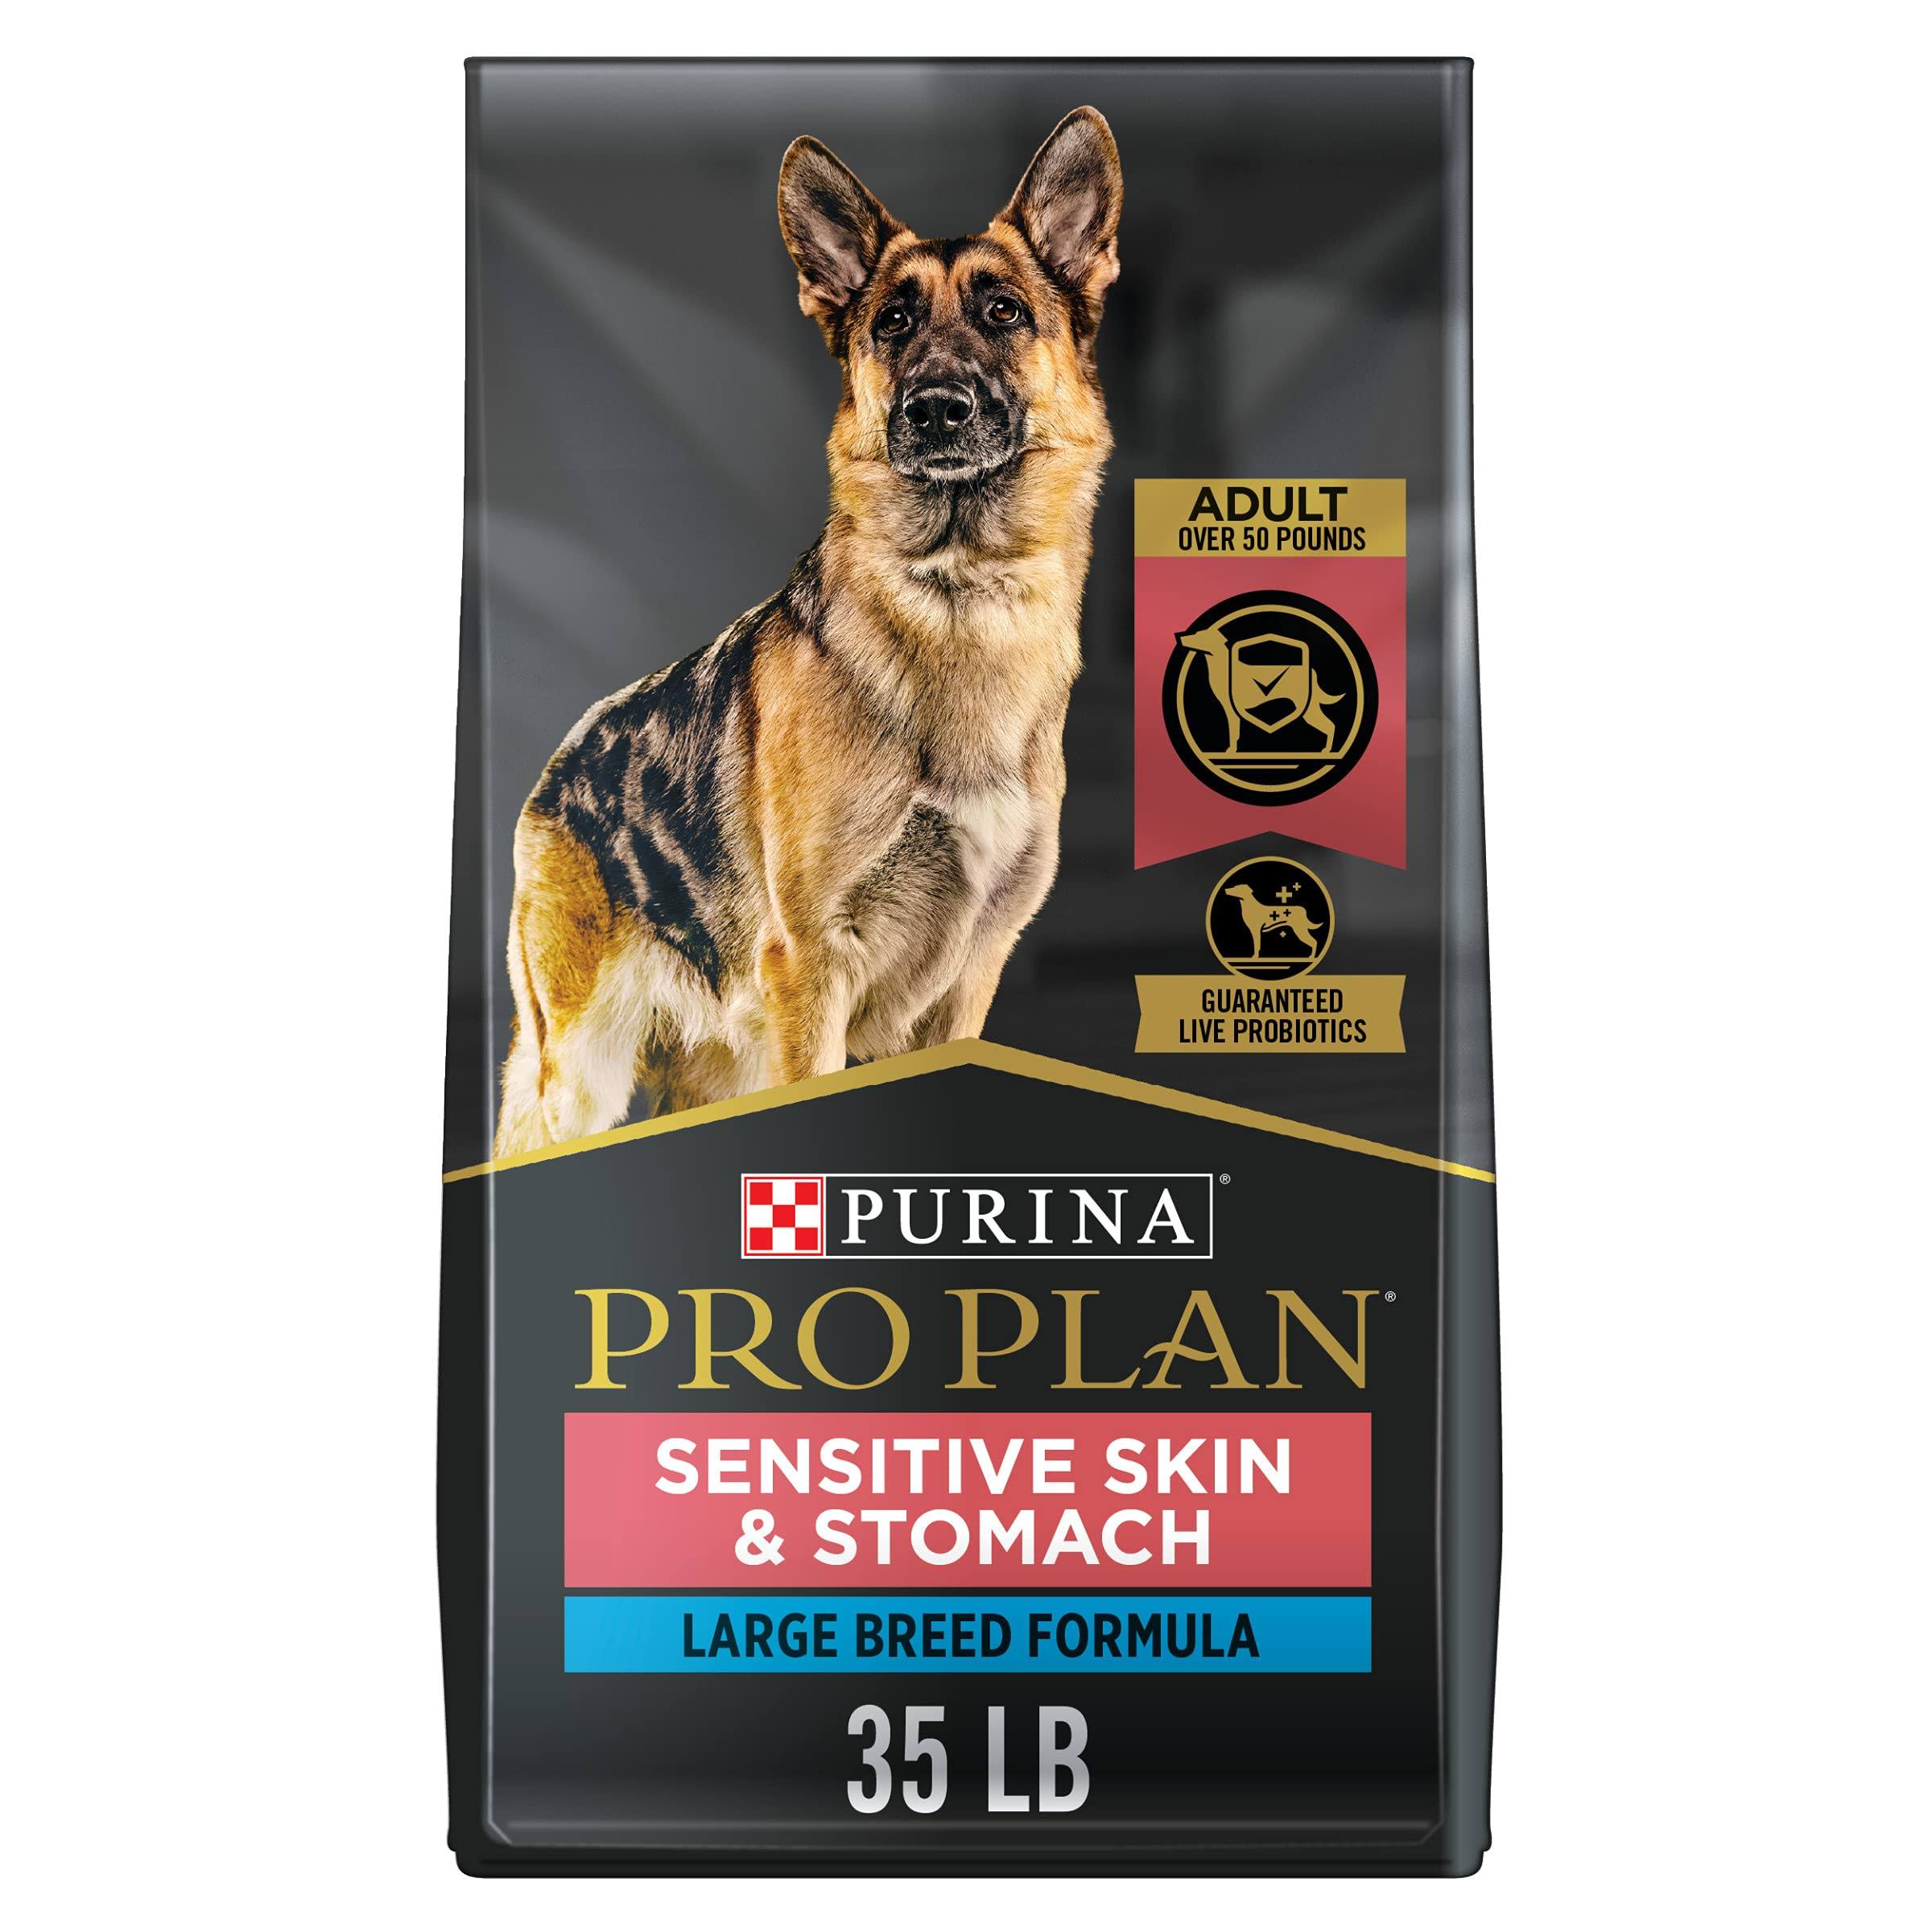 Purina Pro Plan Adult Large Breed Sensitive Skin & Stomach Salmon Dry Dog Food, 35 lbs.